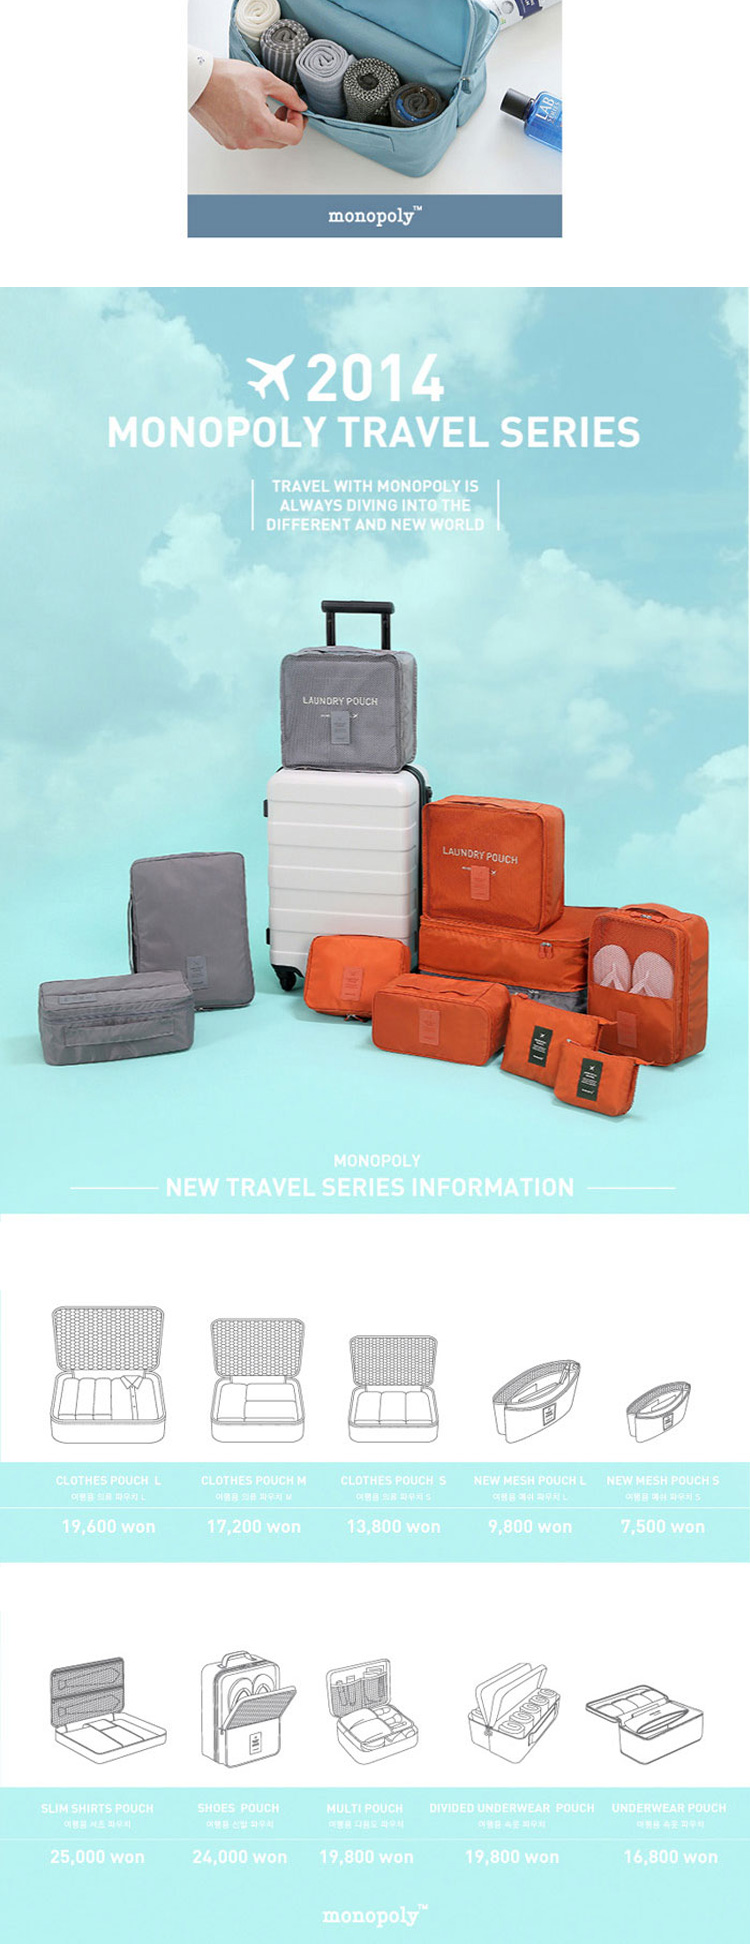 Travel bags, luggage, luggage, underwear, underwear, underwear and waterproof finishing bags10